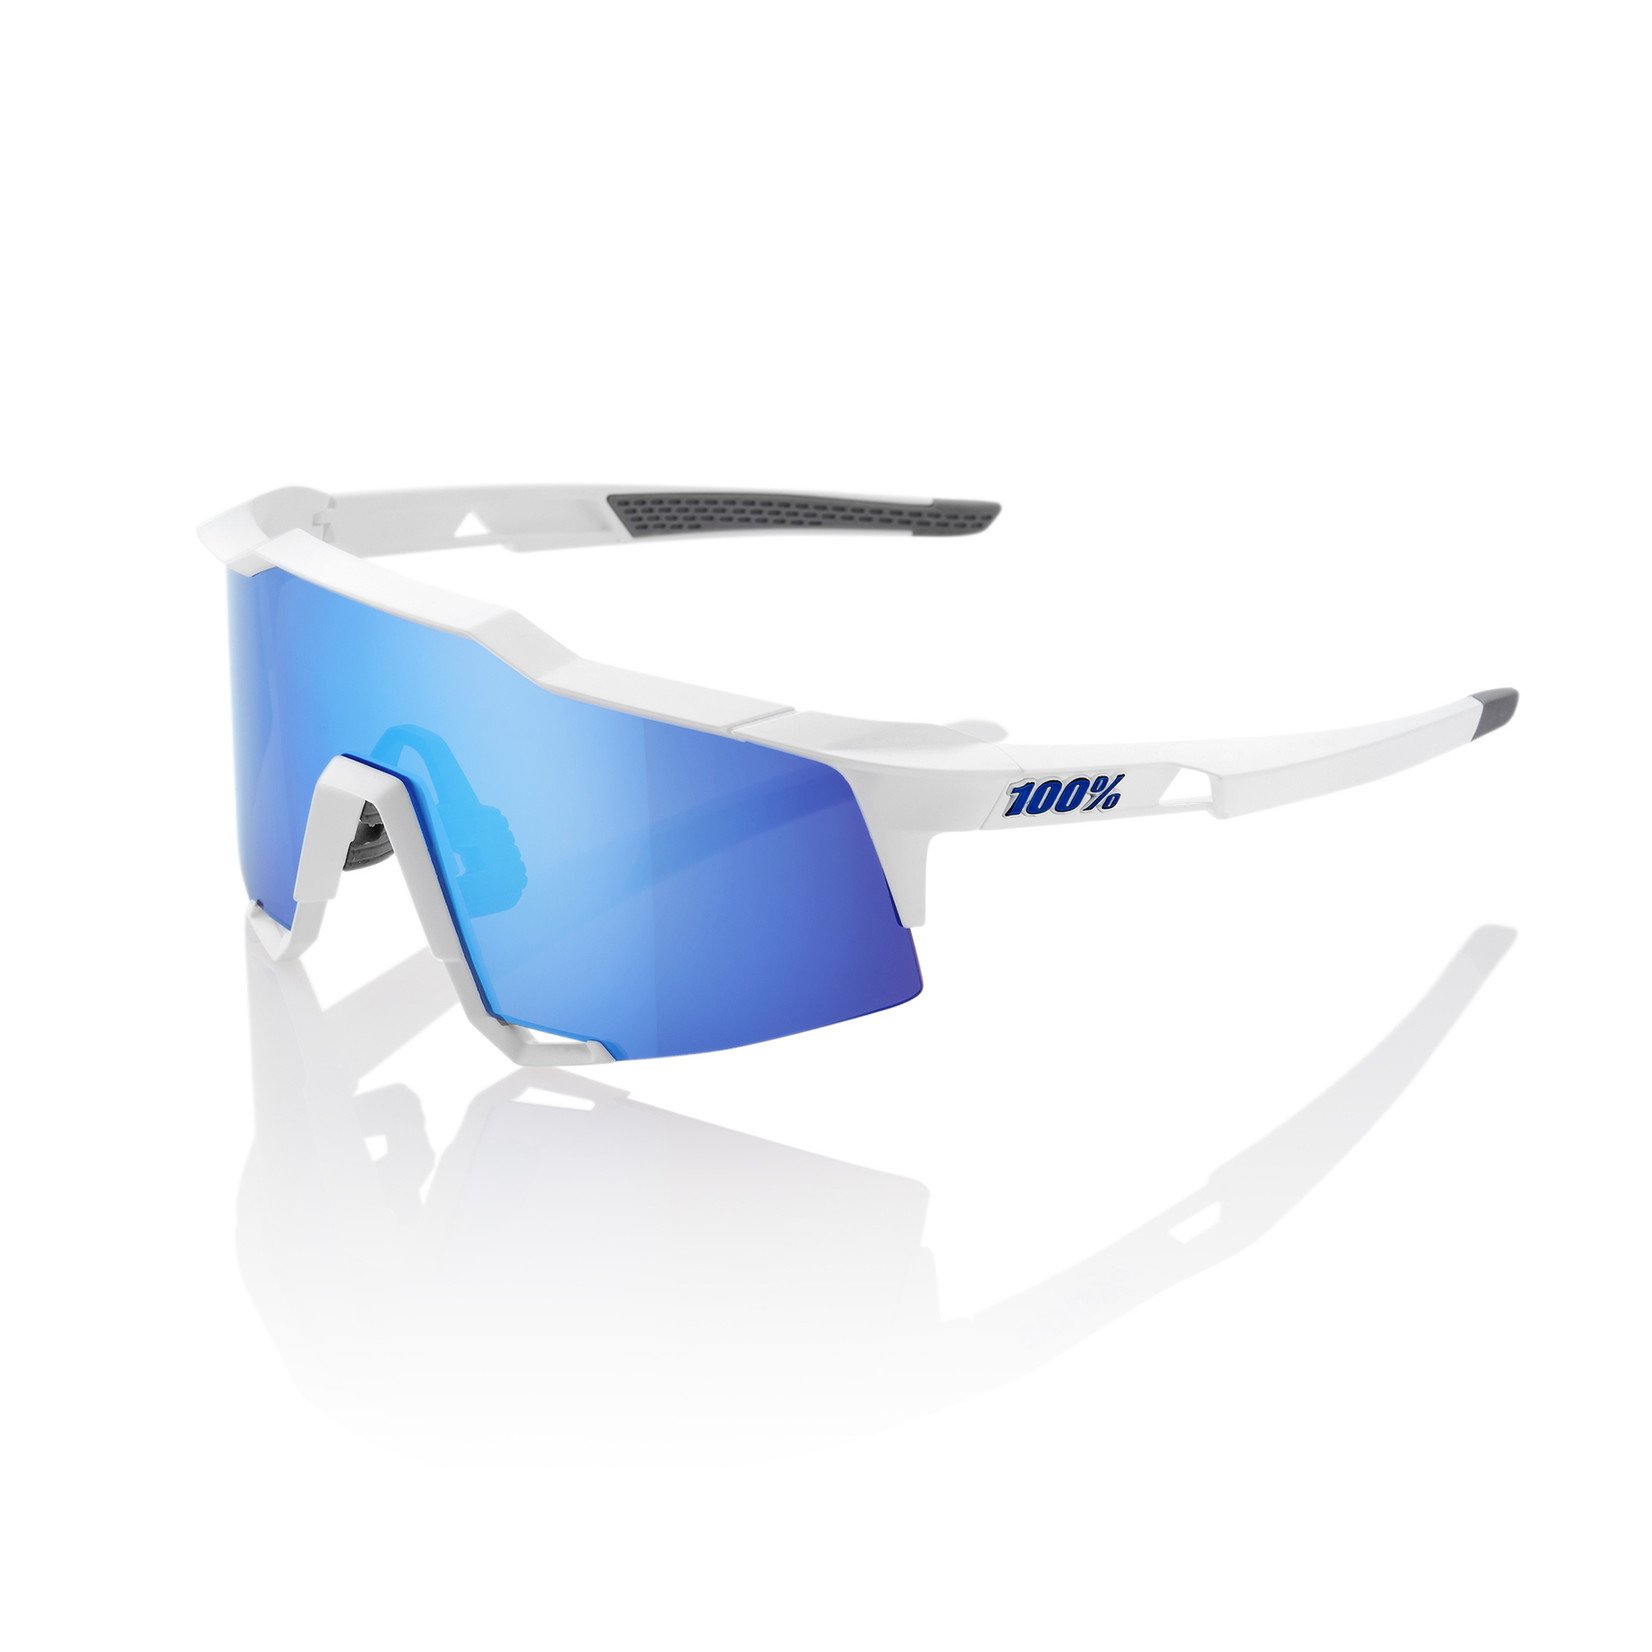 1 100% Speedcraft Bike Sunglasses Matte White - Hiper Blue